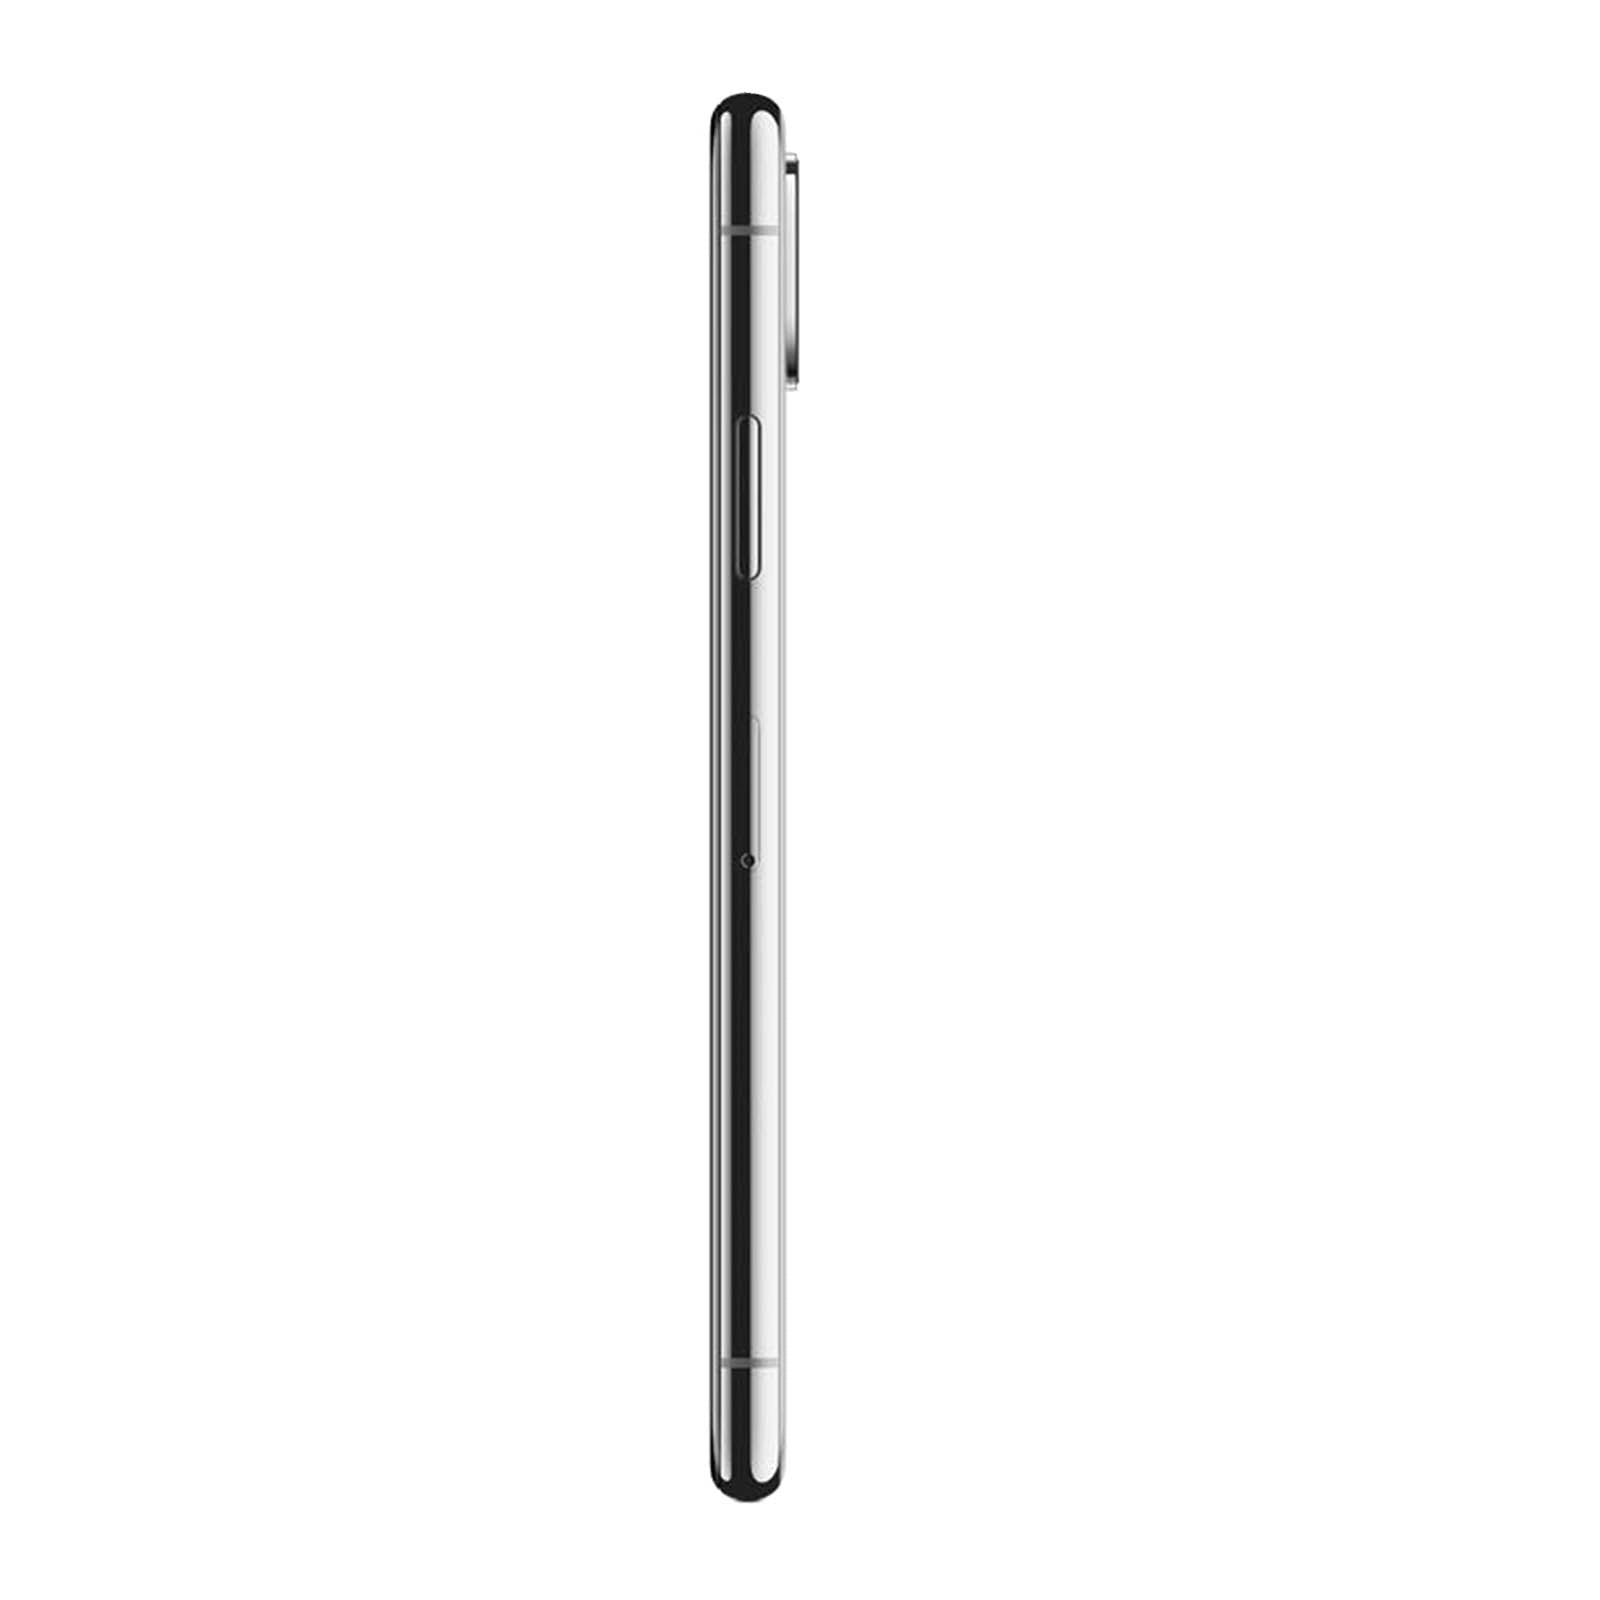 Apple iPhone XS Max 512GB Space Grey Fair - Verizon